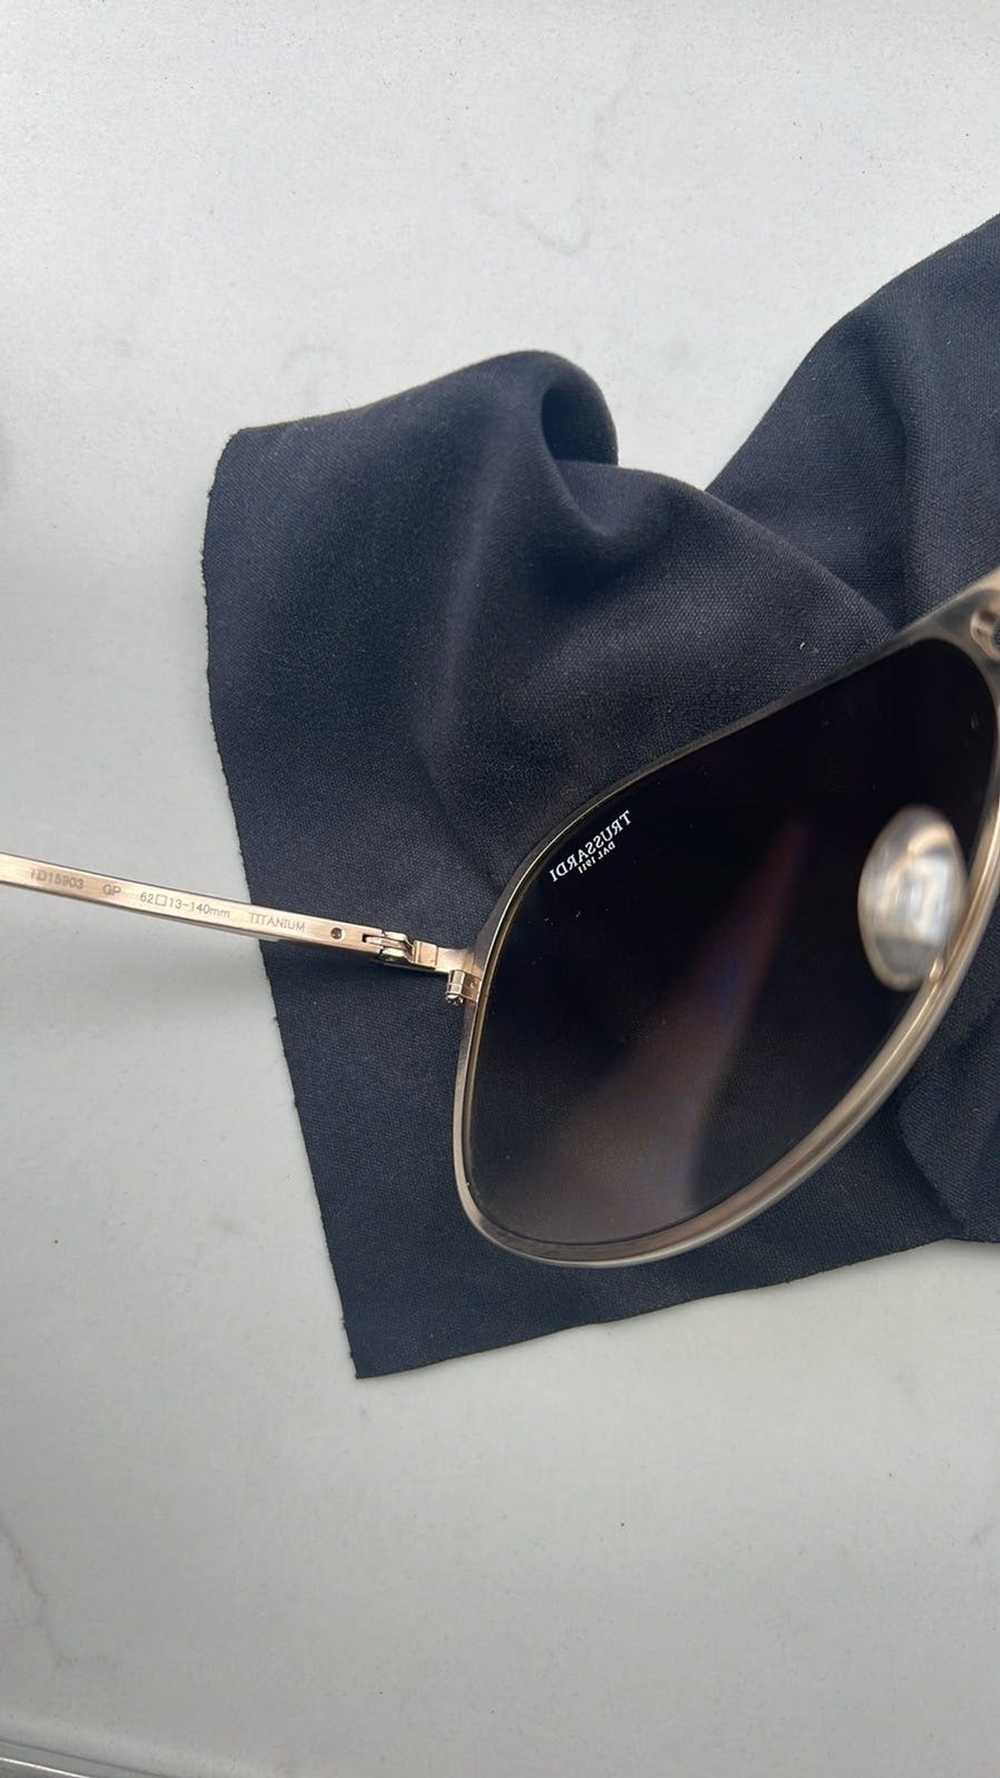 Trussardi Limited edition sunglasses by Trussardi - image 9